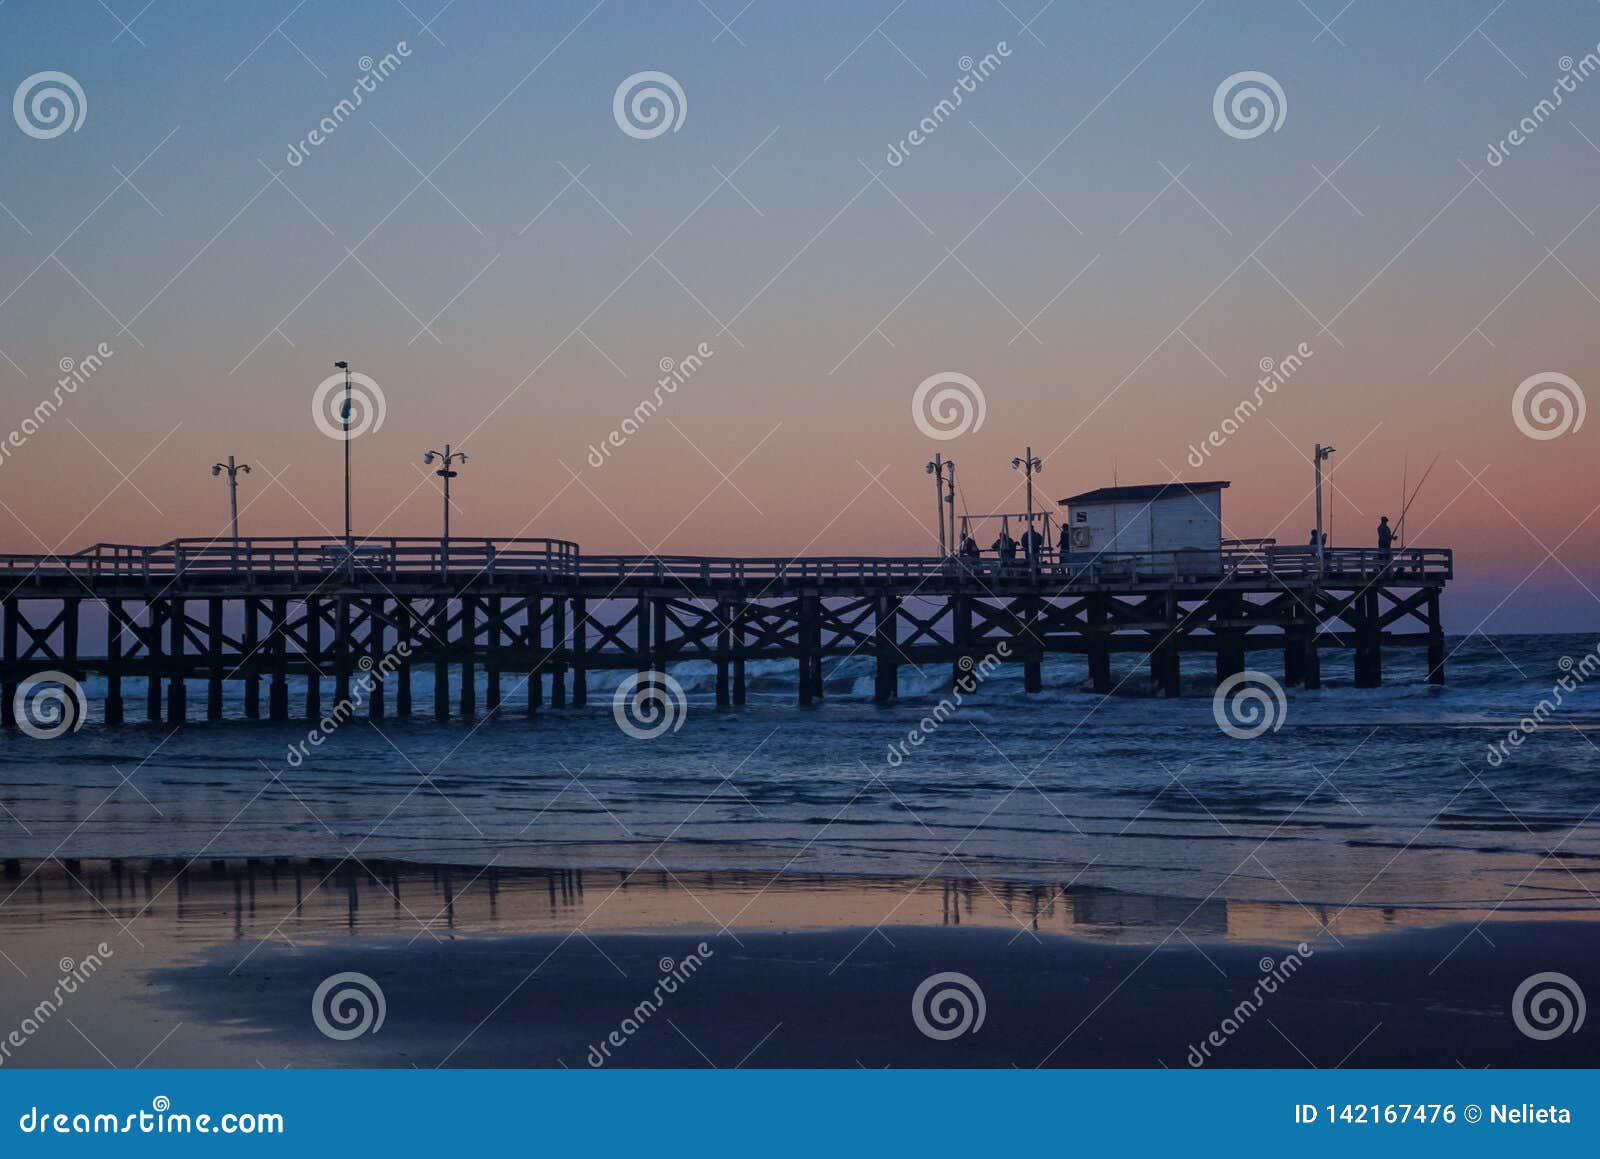 the pier in san bernardo del tuyu